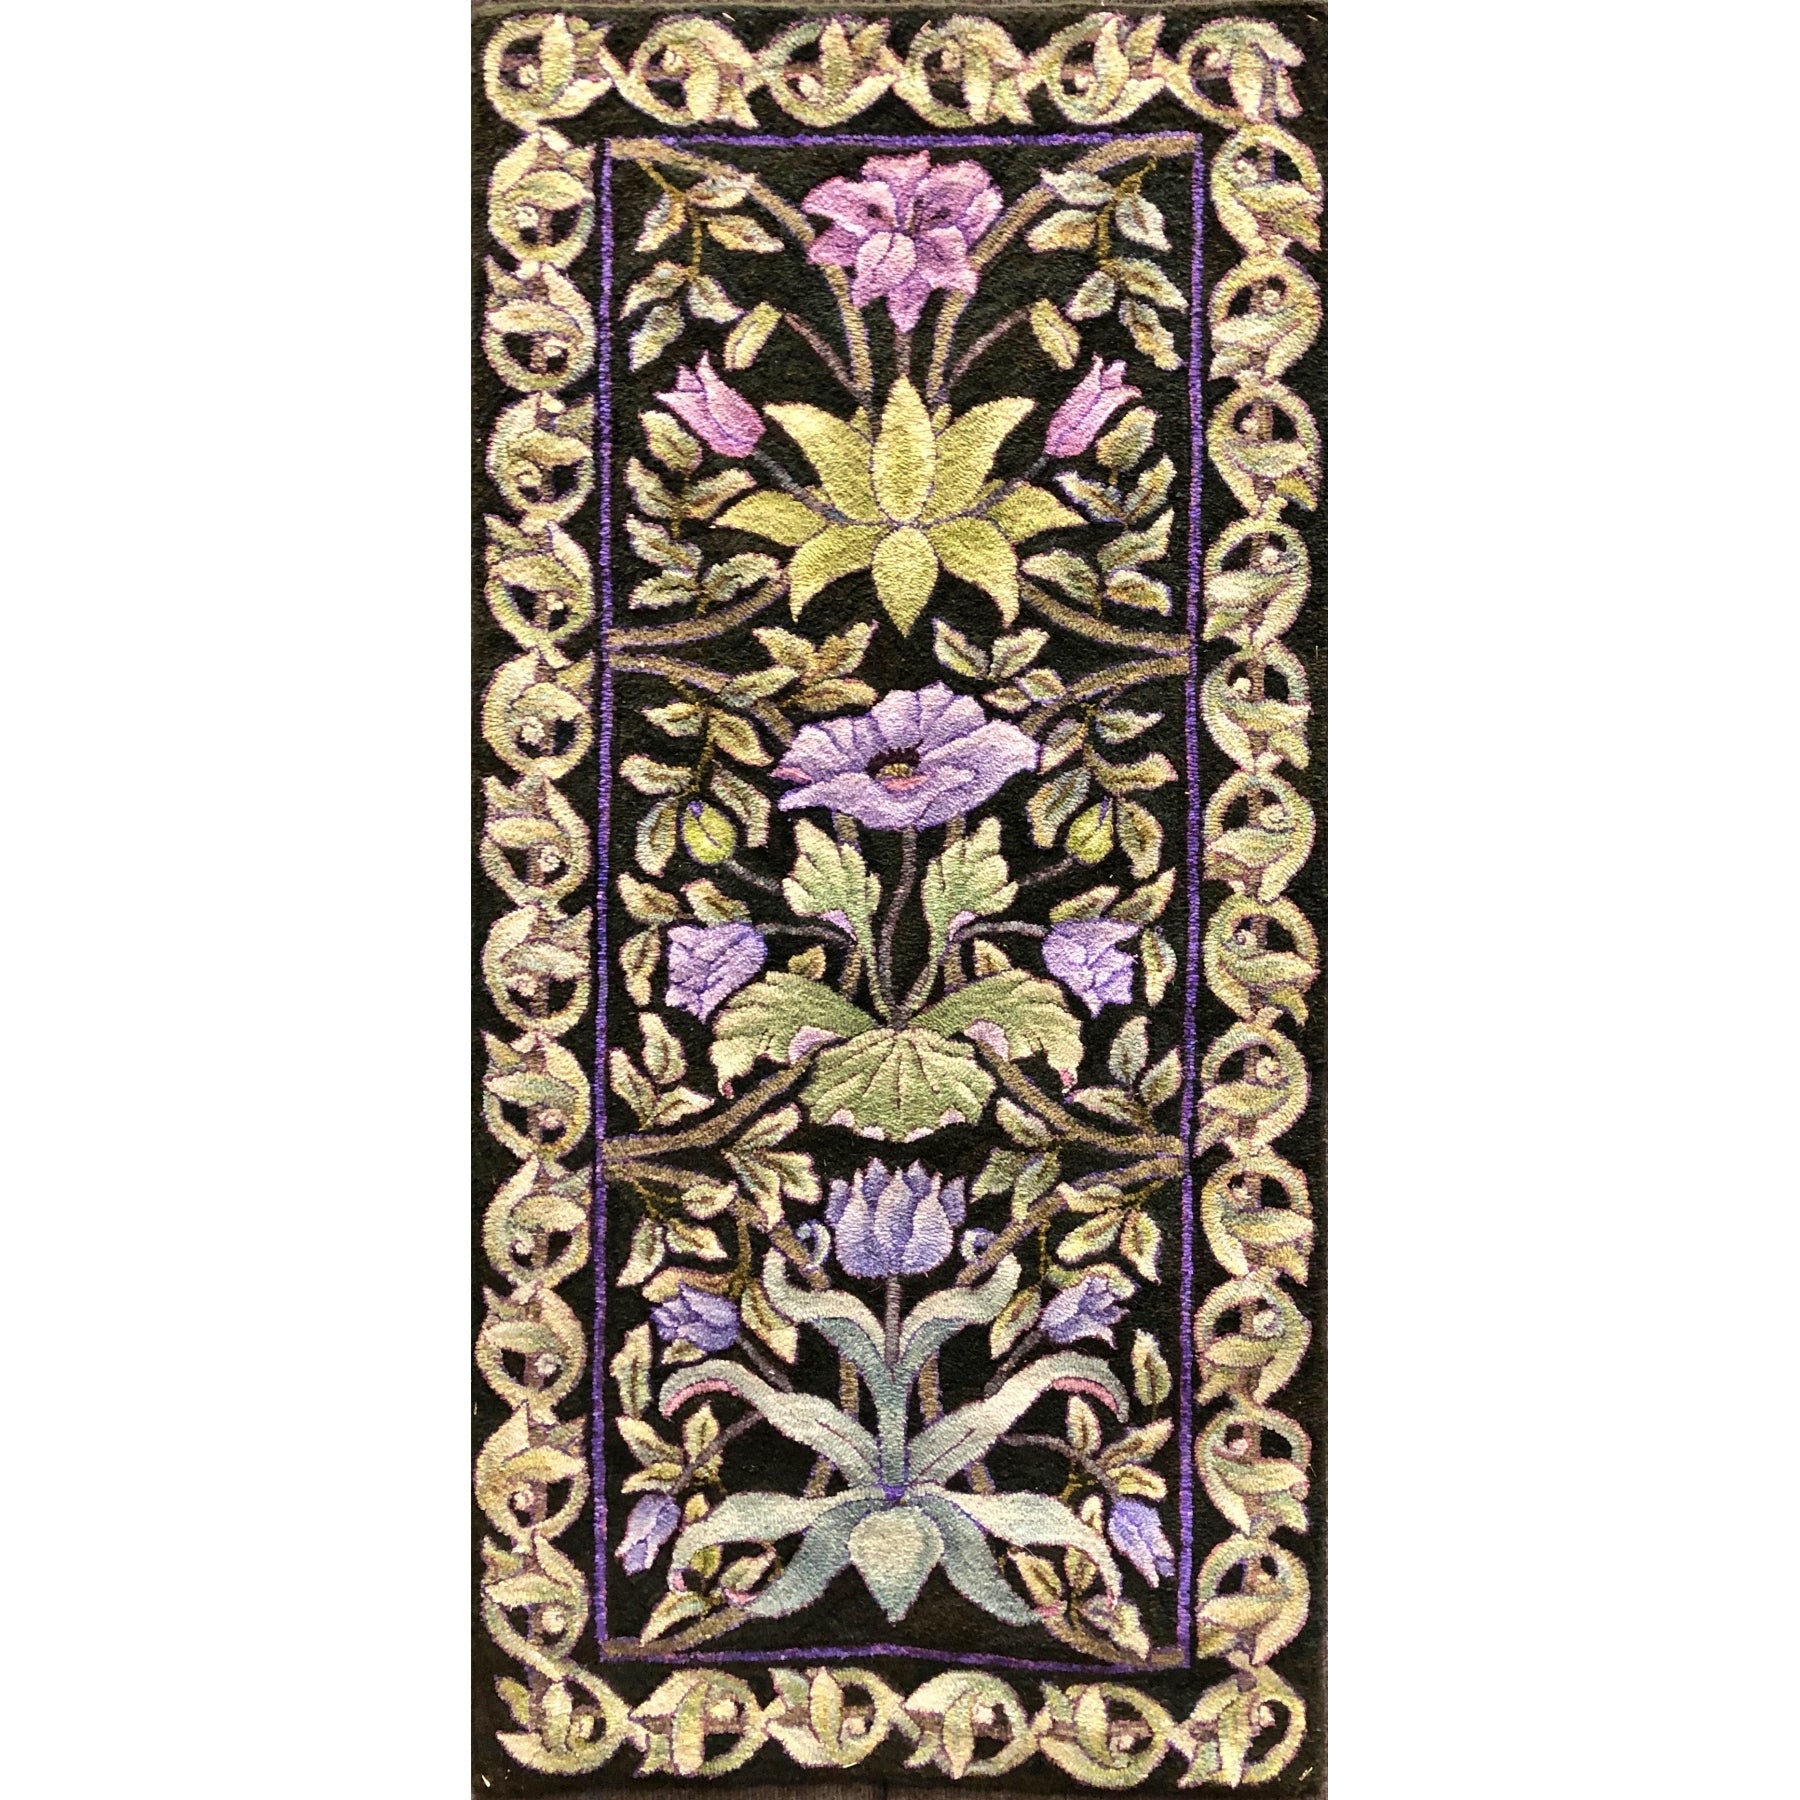 Merton Abbey, rug hooked by Sheri Matz